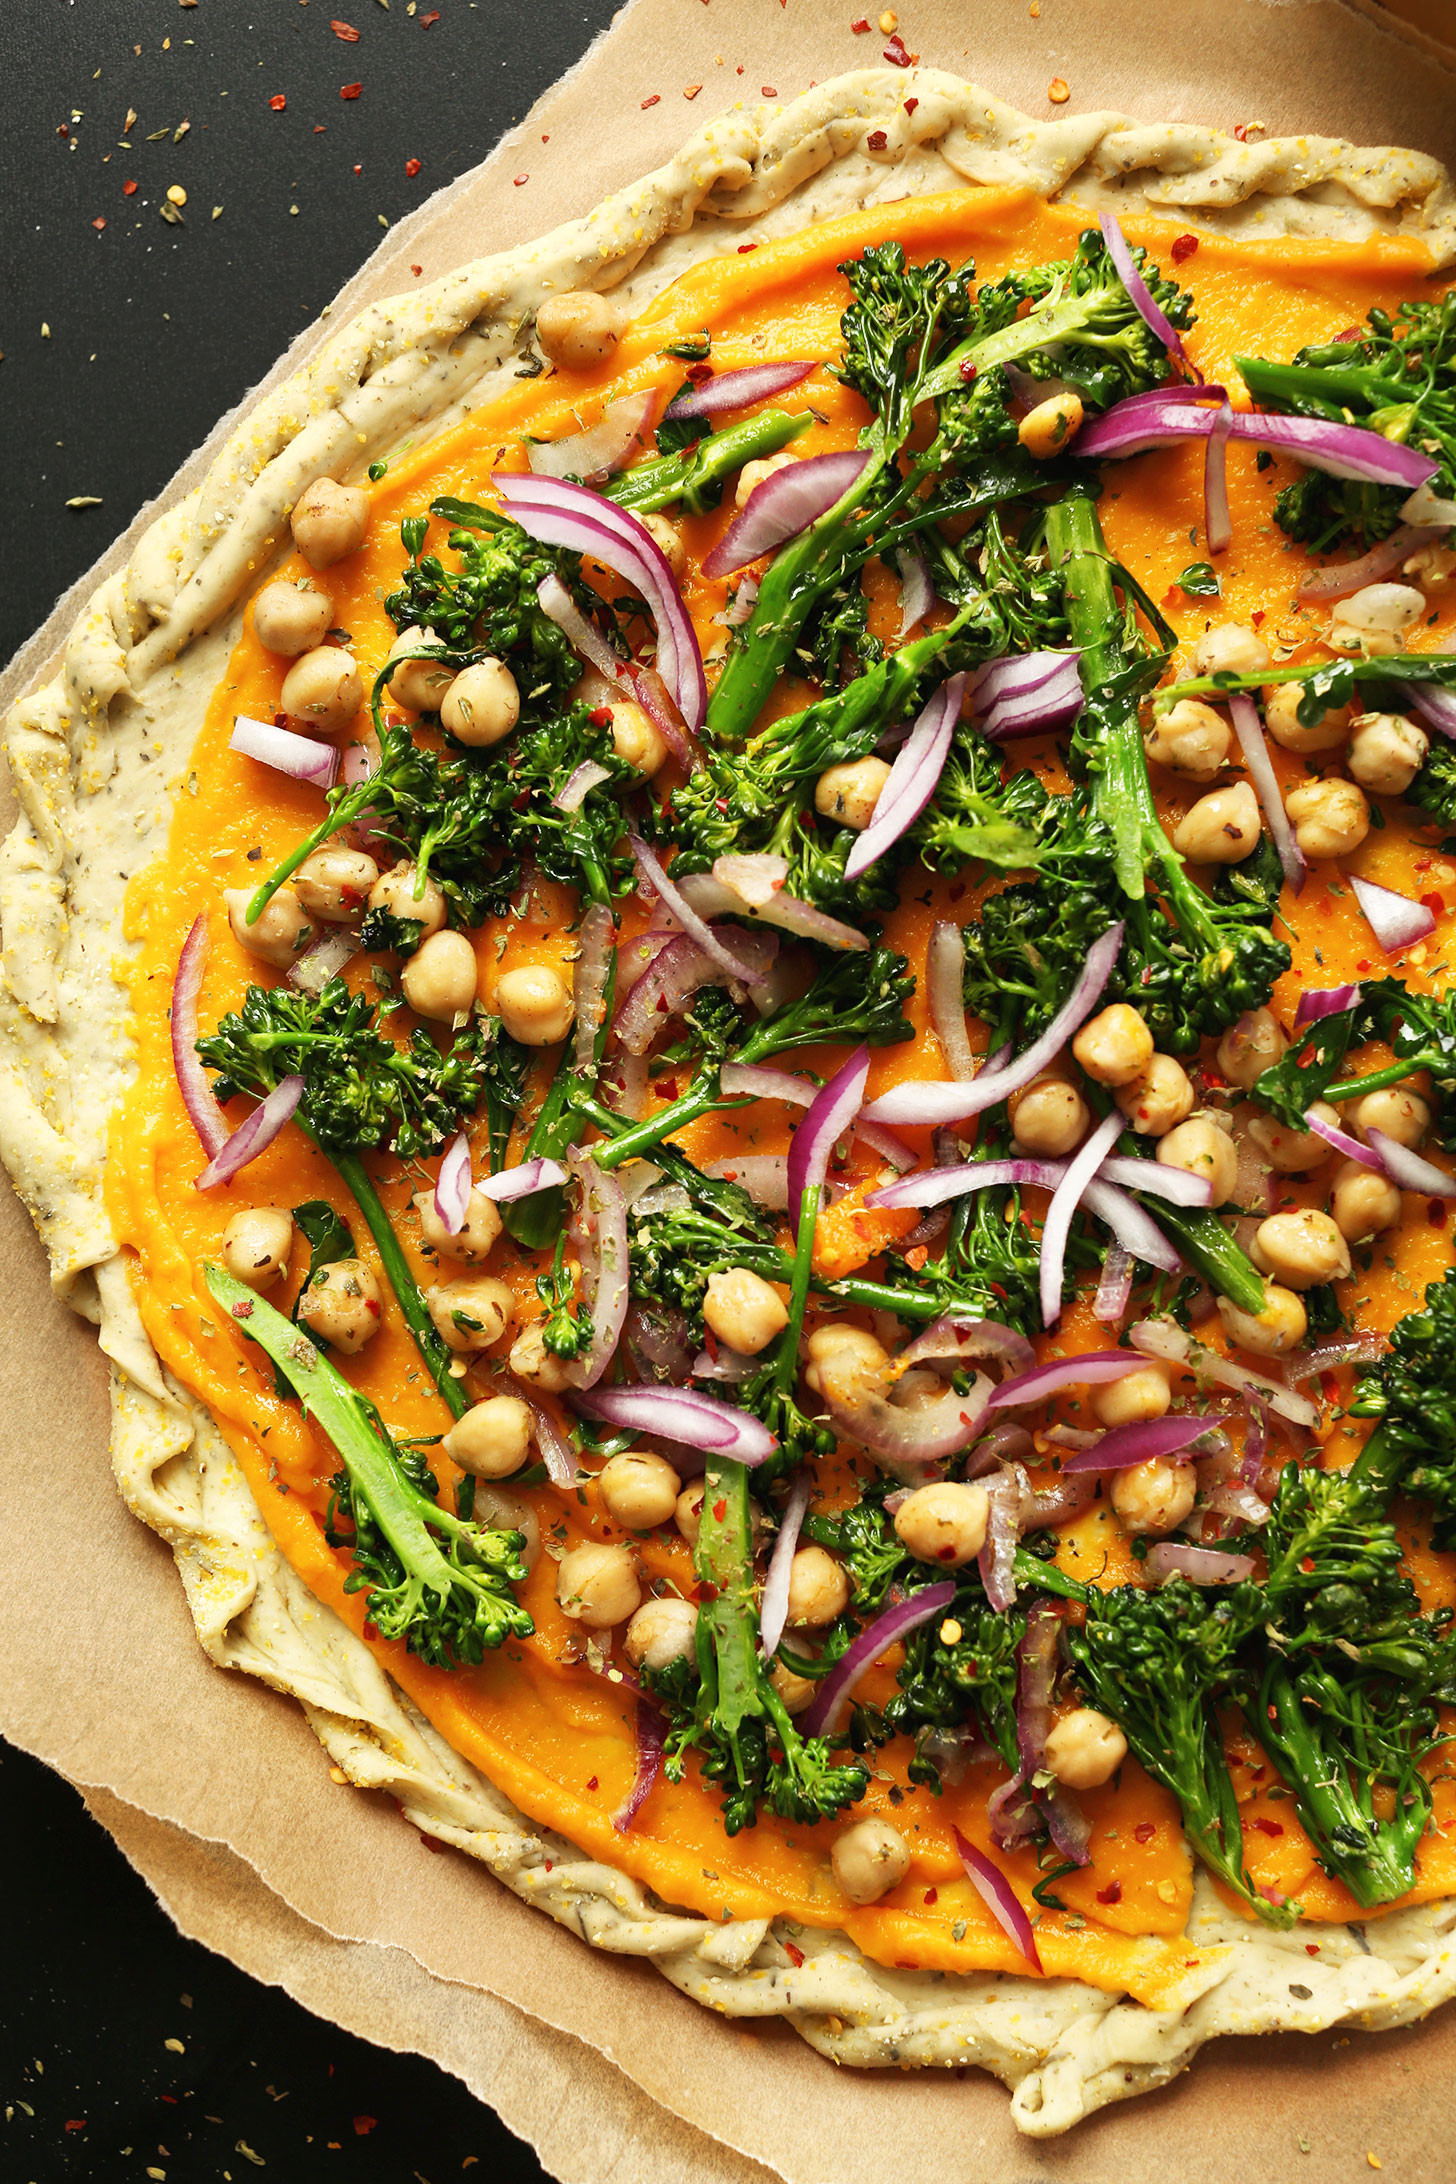 Healthy Vegan Recipes
 The ultimate vegan pizza recipe guide featuring 35